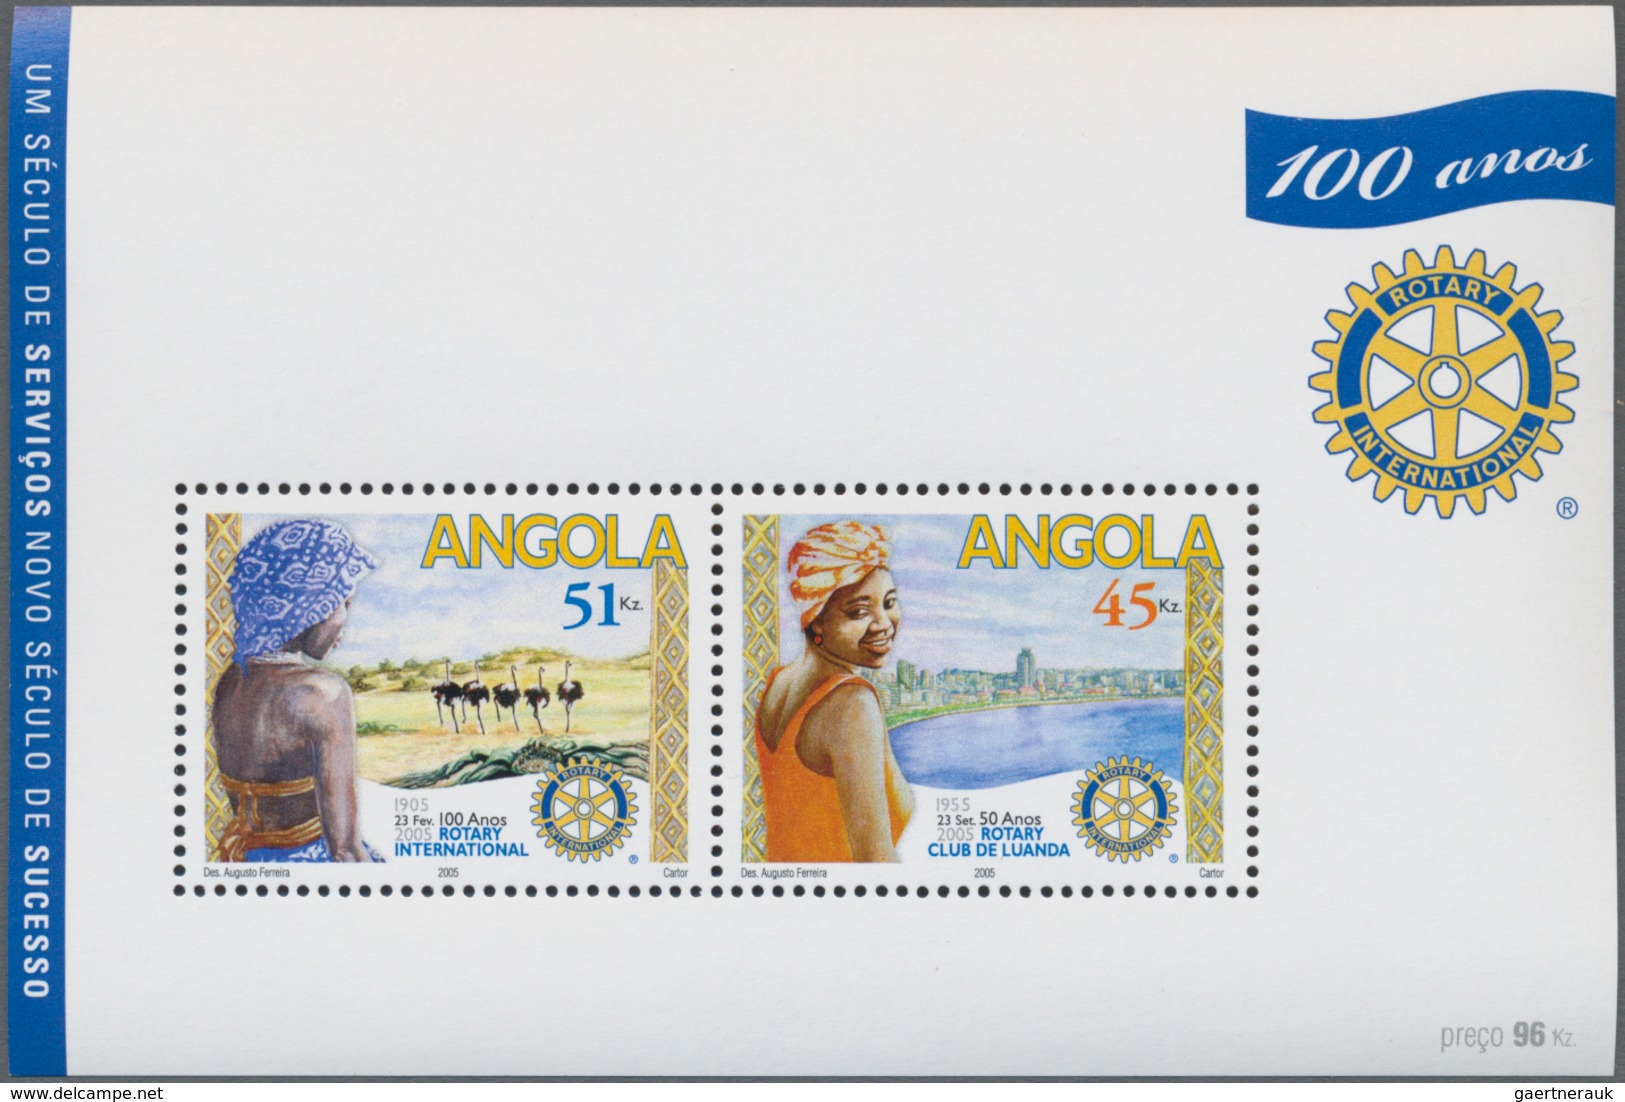 Angola: 2005, ROTARY CLUB, Investment Lot Of 1000 Souvenir Sheets Mint Never Hinged (Mi.no. Bl. 112, - Angola